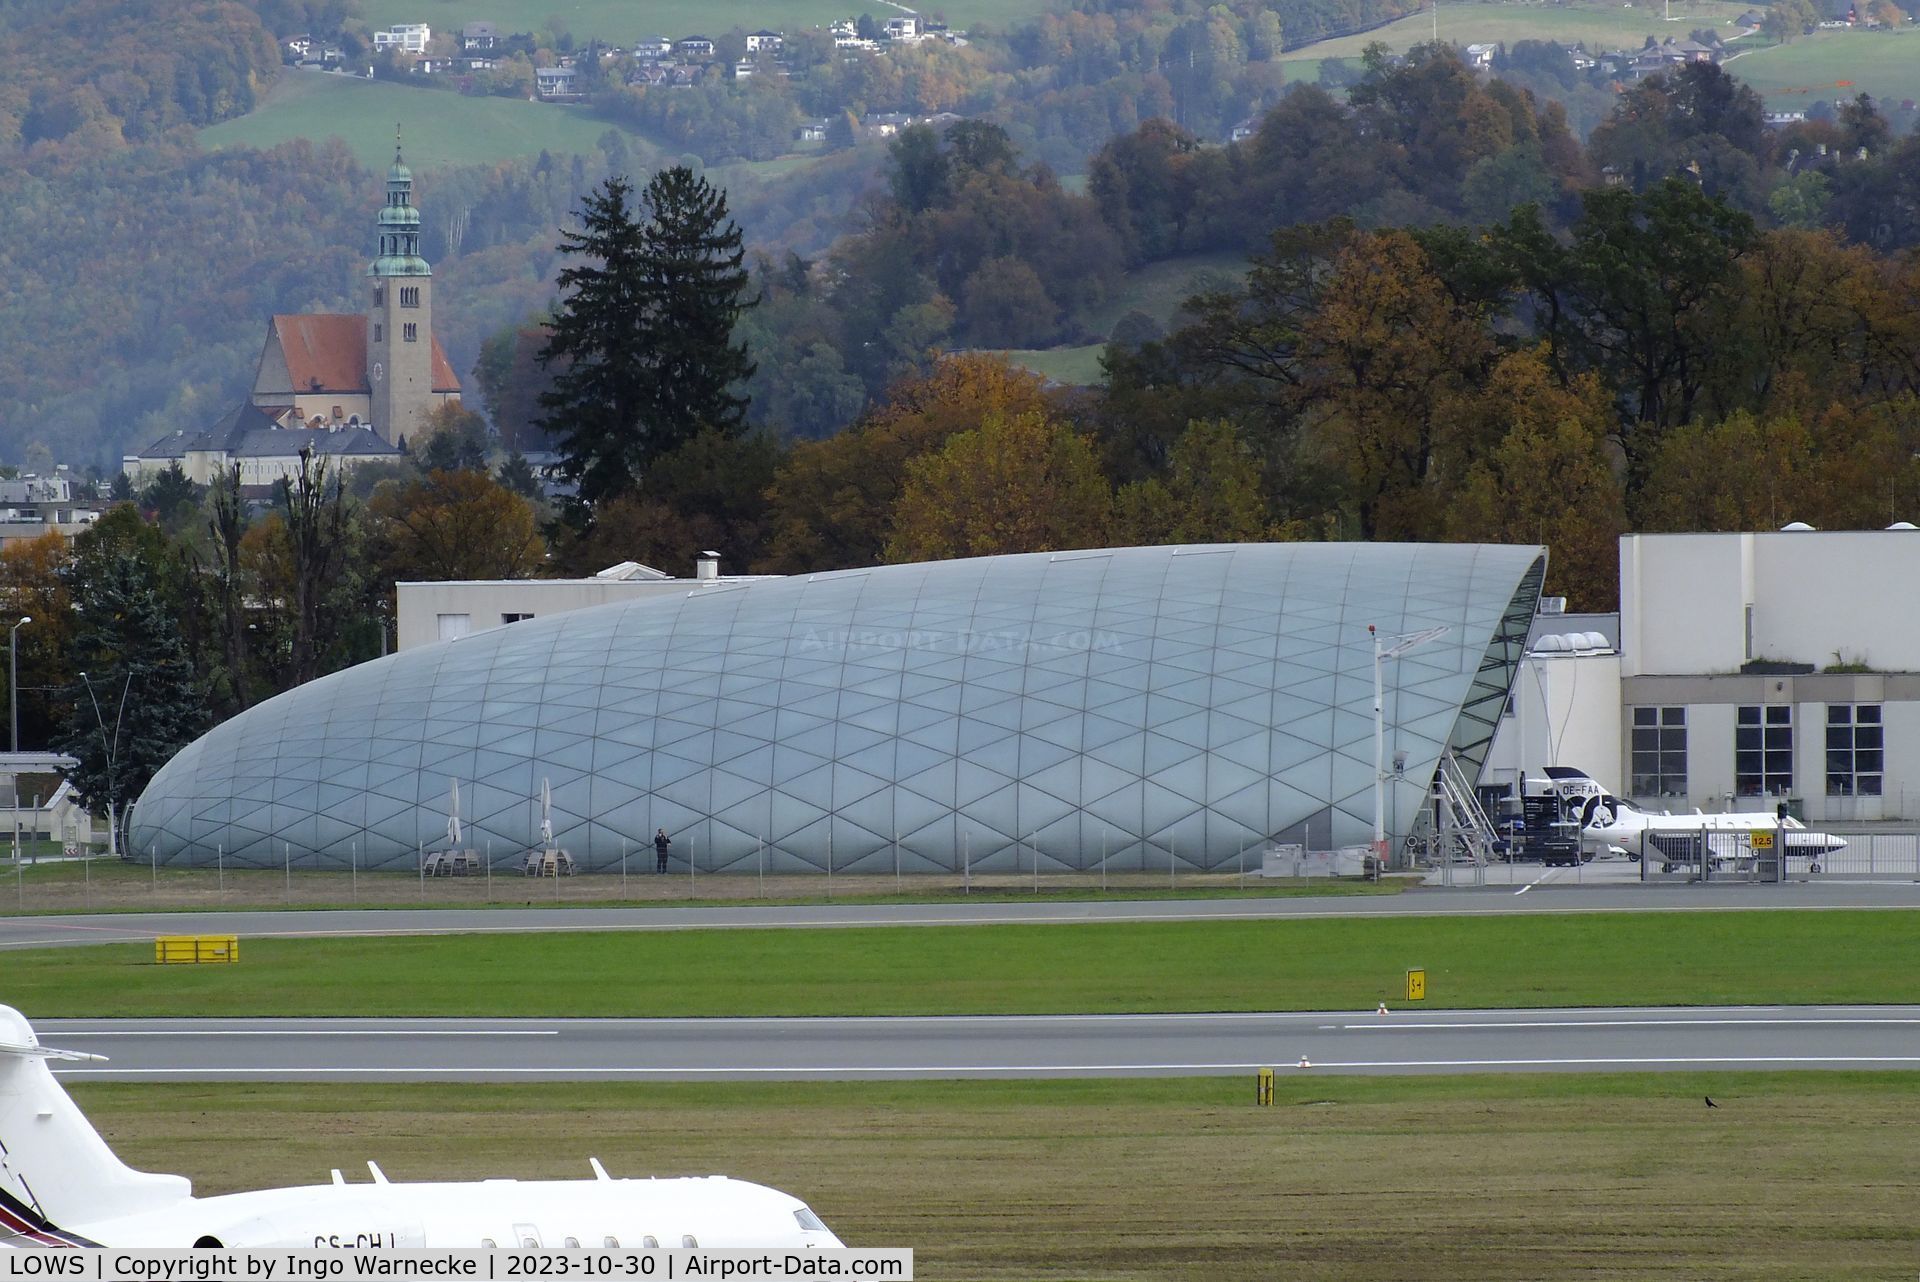 Salzburg Airport, Salzburg Austria (LOWS) - Hangar 8, storage and maintenance hangar of the Red Bull collection at Salzburg airport